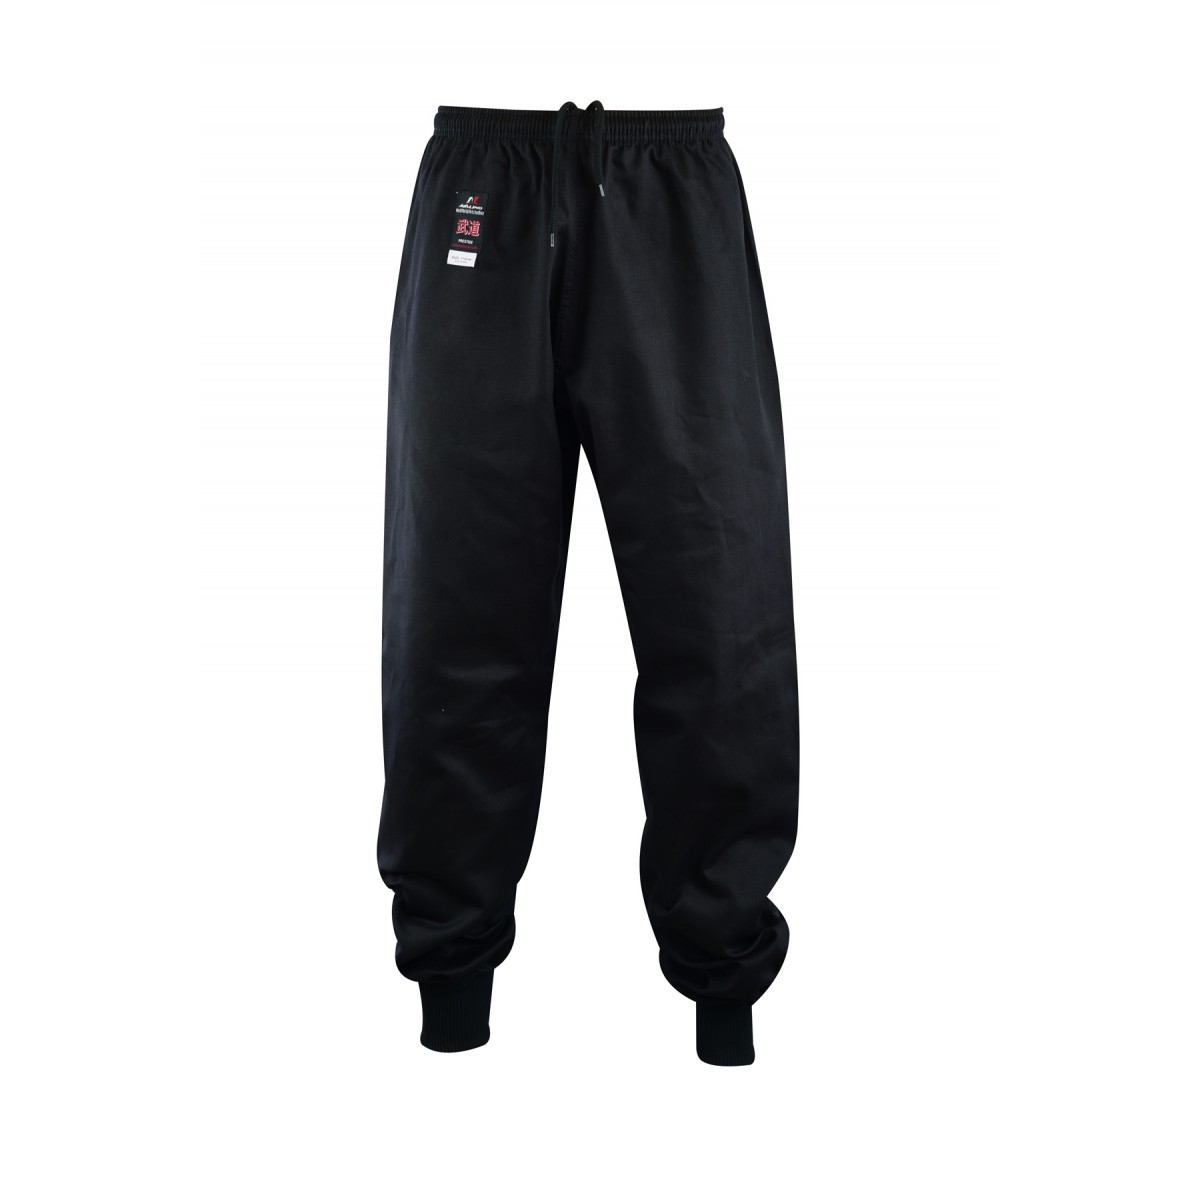 Malino Adult Kung Fu Trousers Cotton Black - 8oz